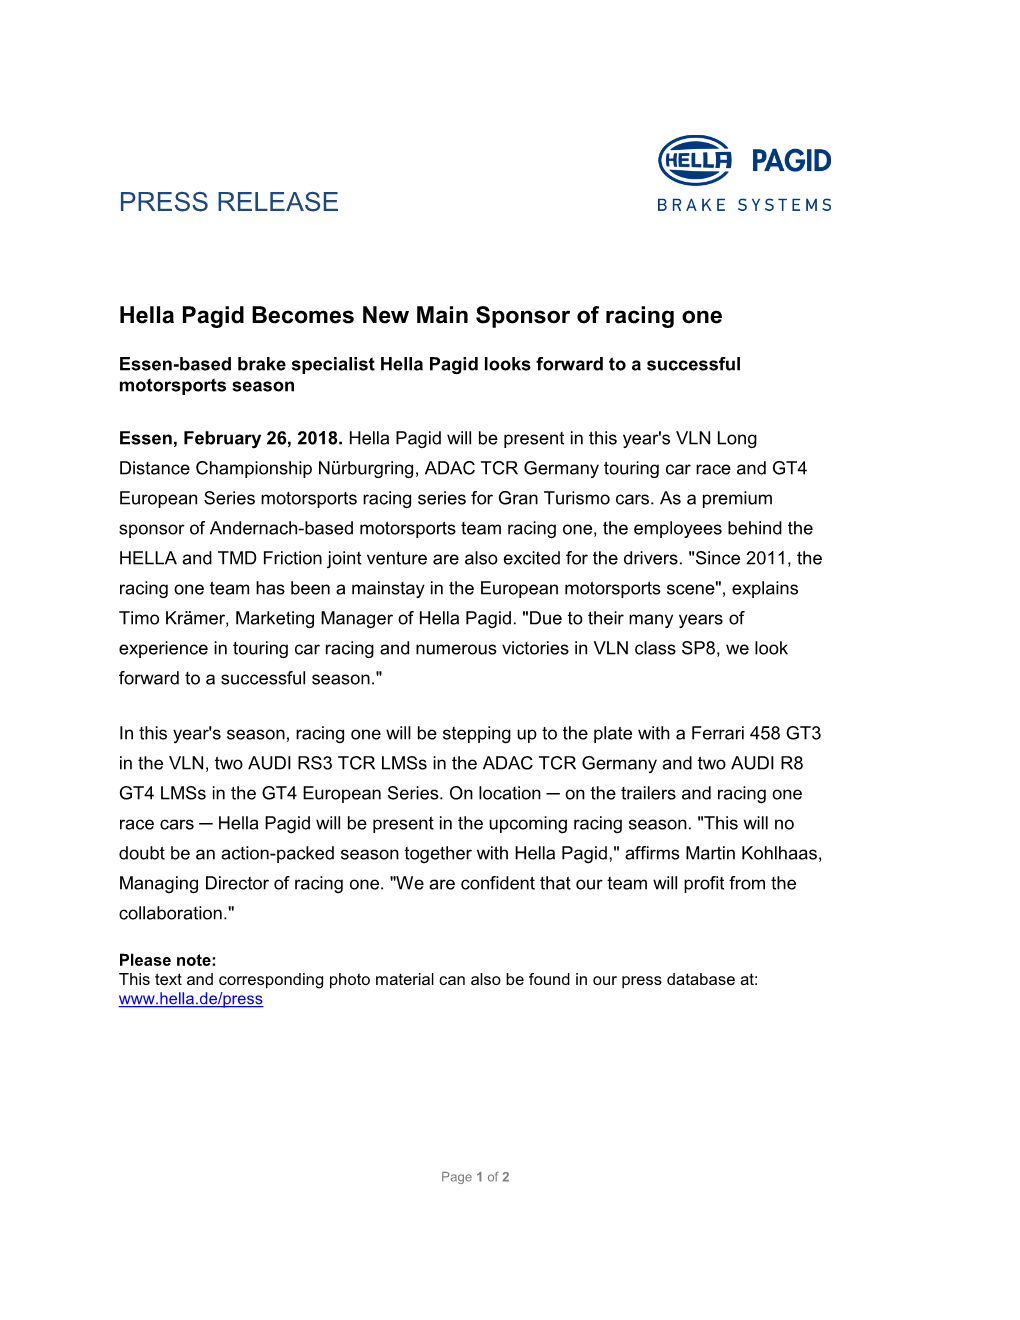 Hella Pagid Becomes New Main Sponsor of Racing One